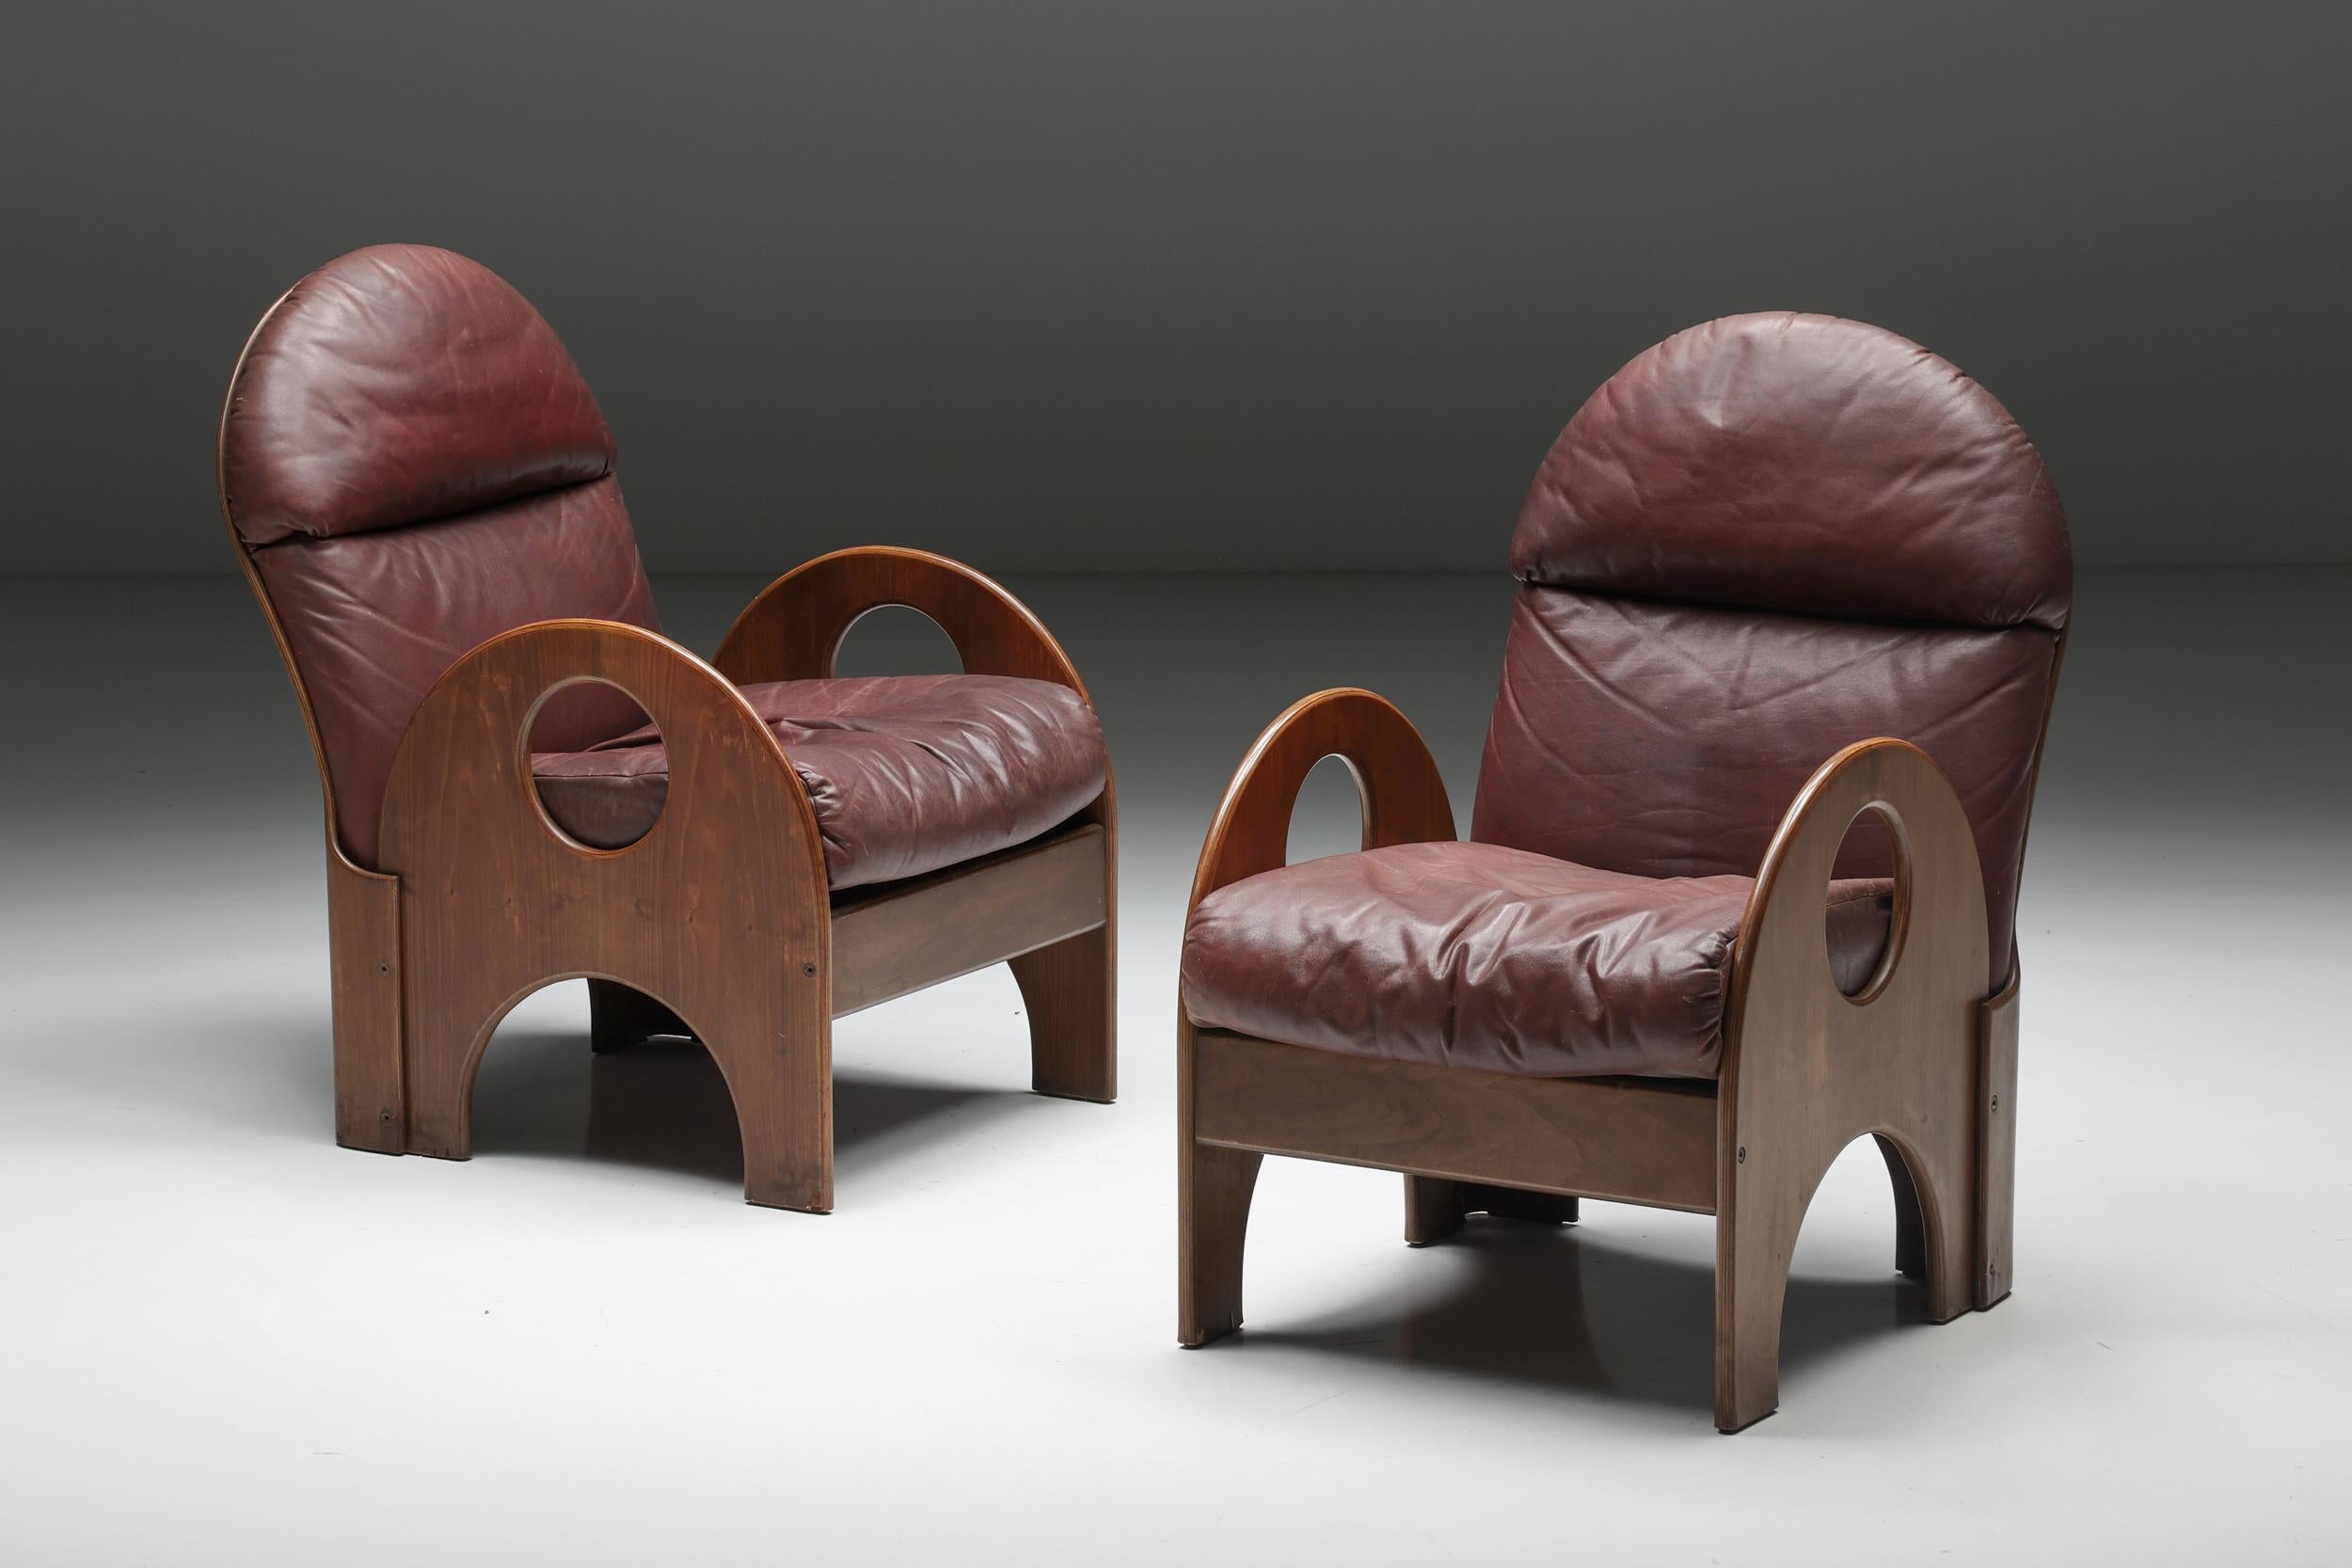 Gae Aulenti ; Easy Chairs ; fauteuils ; Arcata ; Poltronova ; Italian Design ; Italie ; 1968 ; noyer ; cuir bourgogne ; Mid-Century Modern ;

Paire de fauteuils 'Arcata' de Gae Aulenti, noyer et cuir bourgogne, 1968
 
Deux fauteuils 'Arcata',